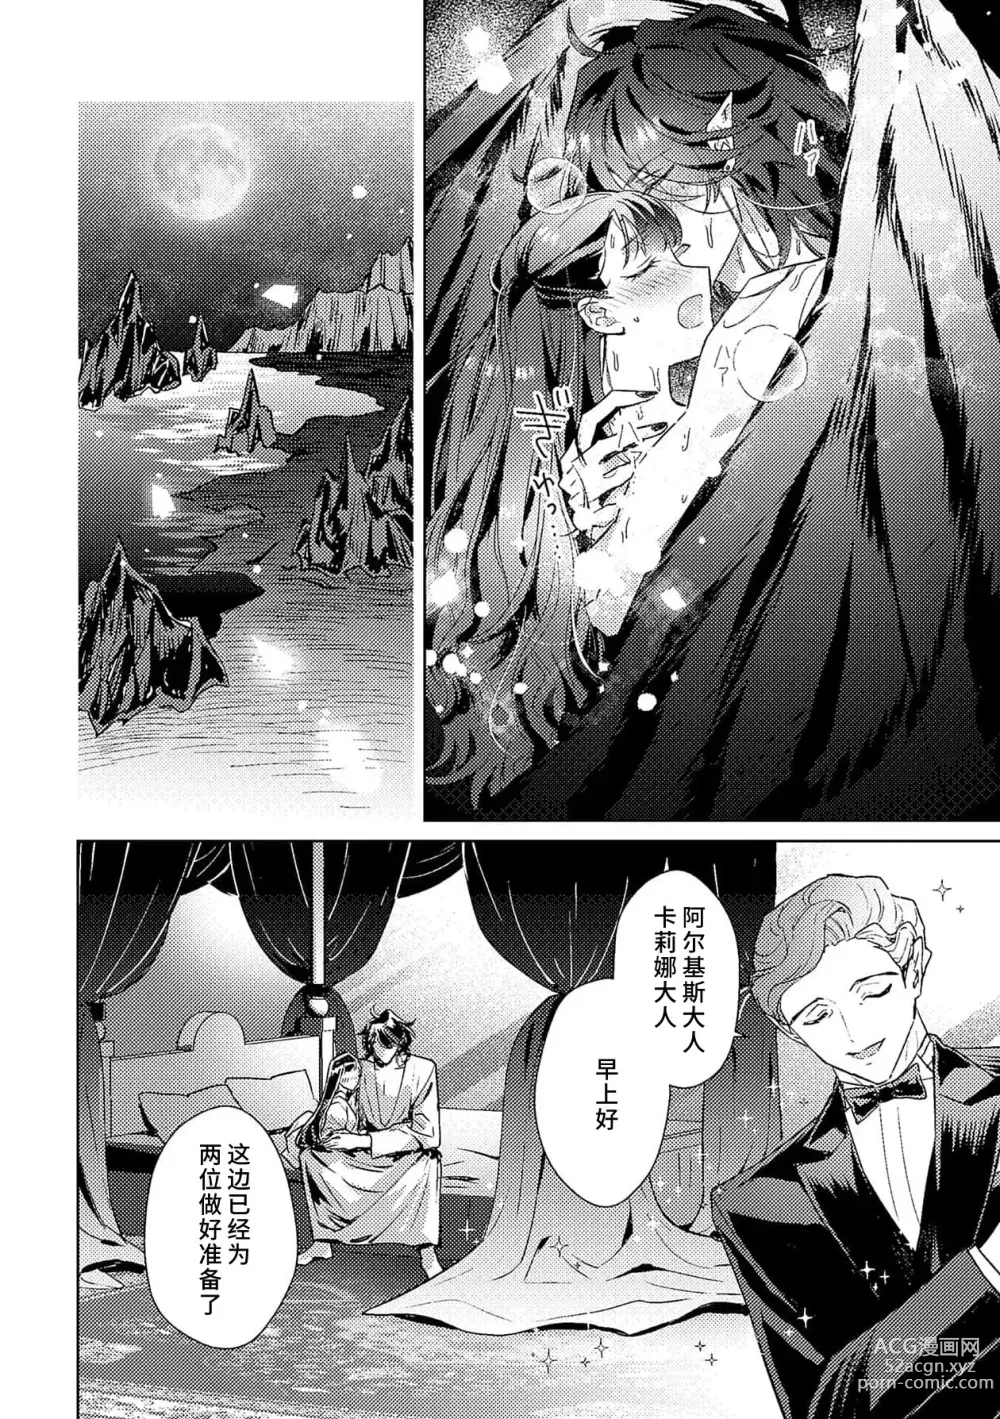 Page 201 of manga 身为恶役千金，堕落于魔界王子身下这条路线真的可以有？ 1-7